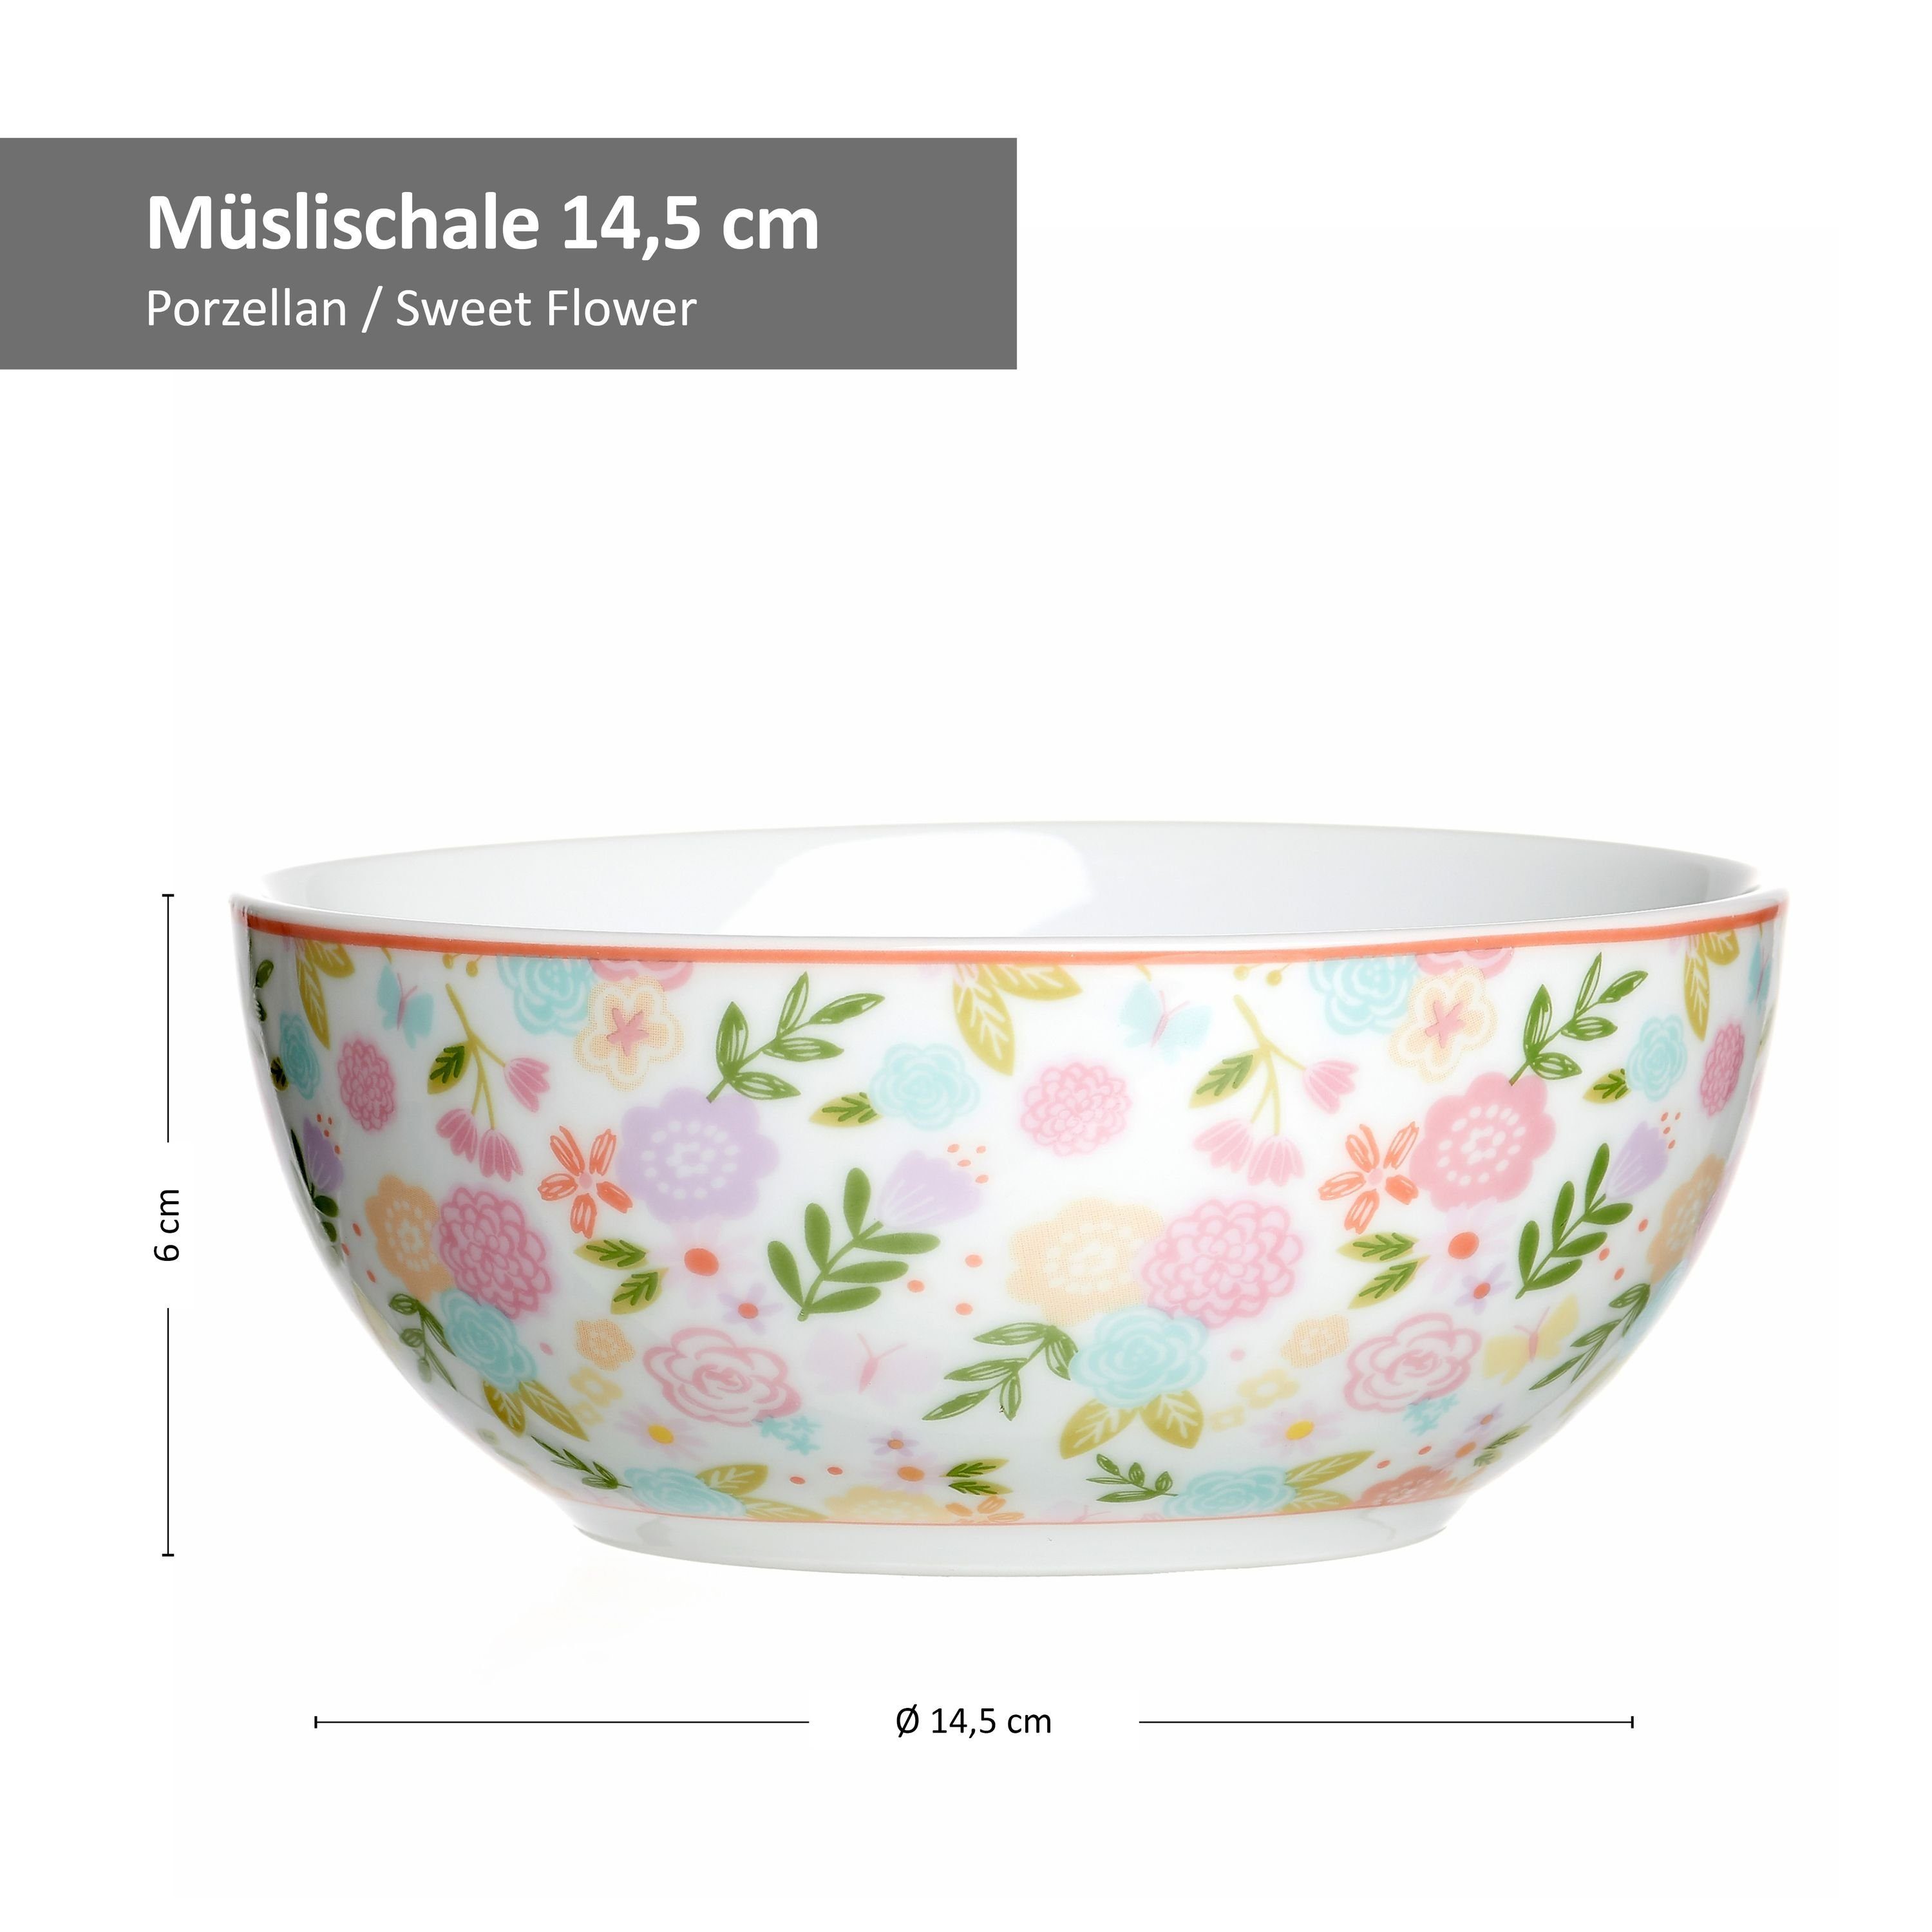 Ritzenhoff & Breker Müslischale Müslischale 14,5cm Porzellan 4er Flower - Set Sweet Ritzenhoff 402759